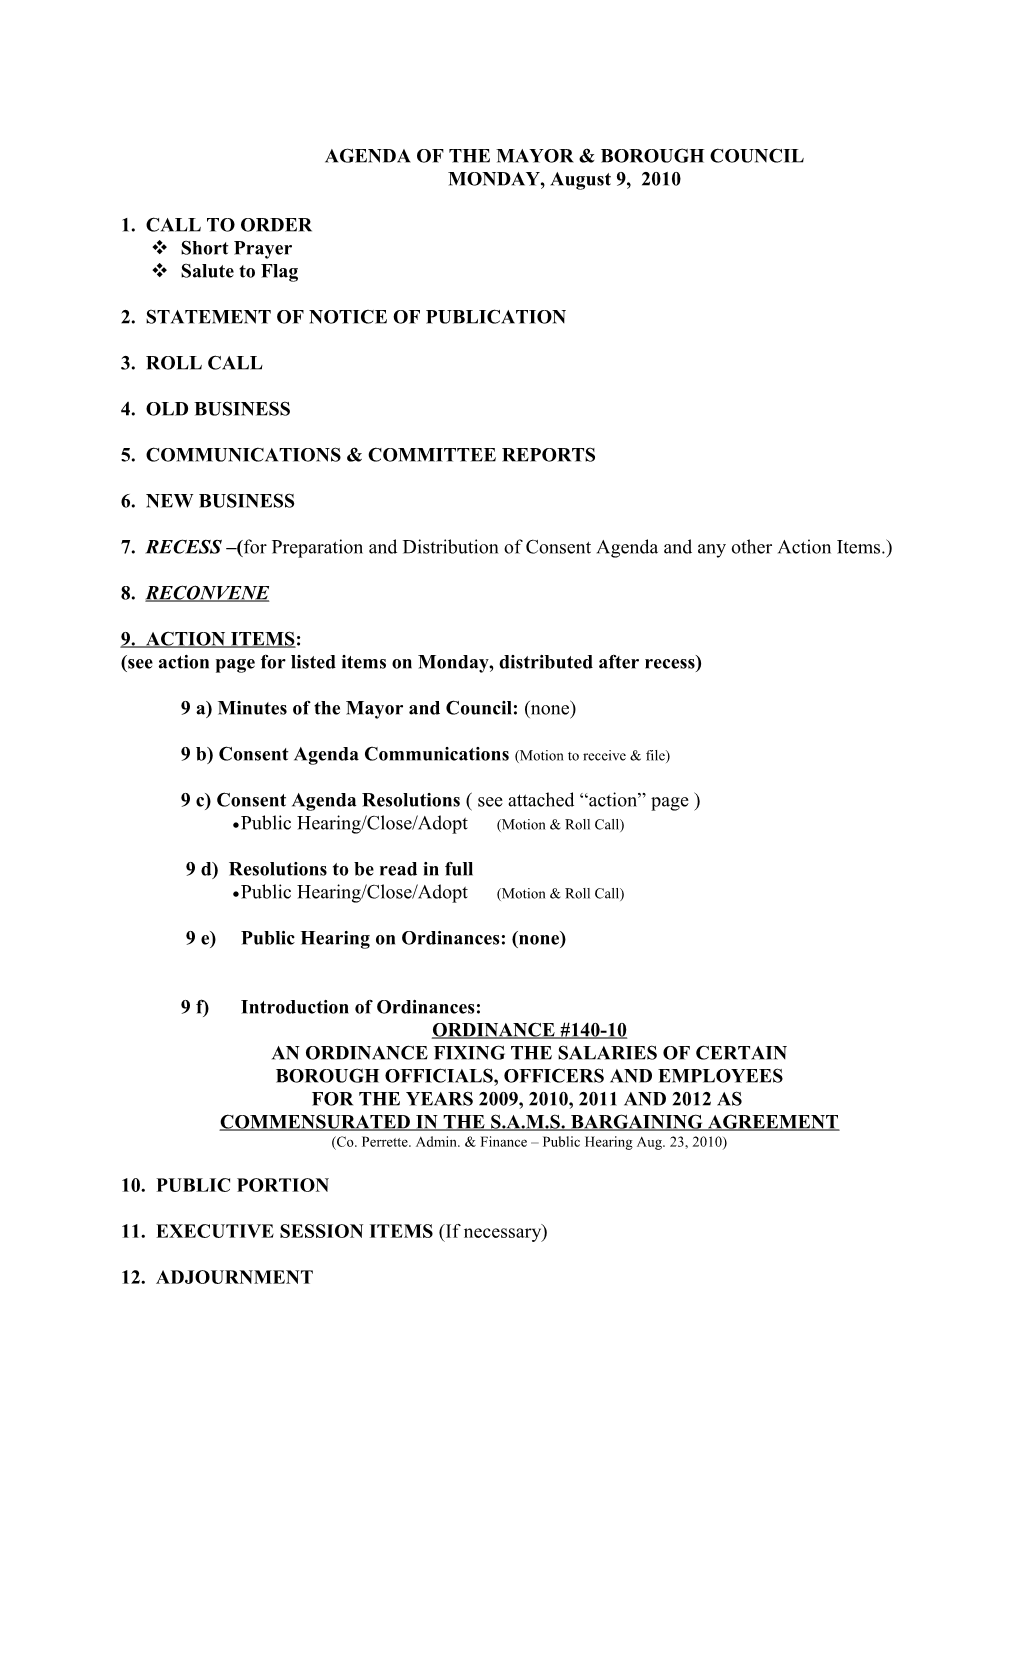 Agenda of the Mayor & Borough Council